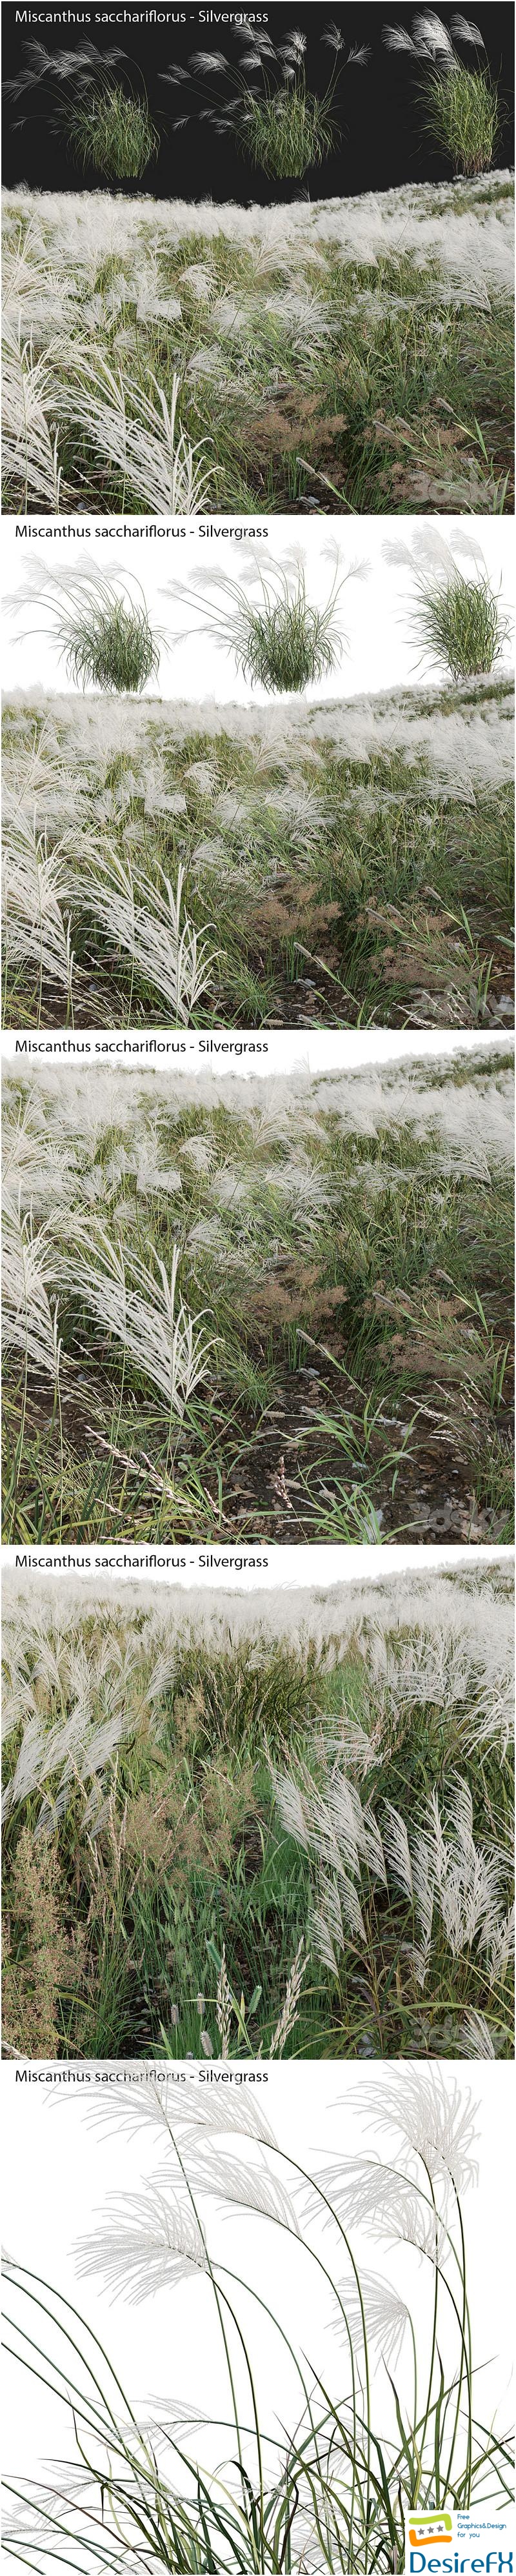 Miscanthus sacchariflorus - Silvergrass 03 3D Model